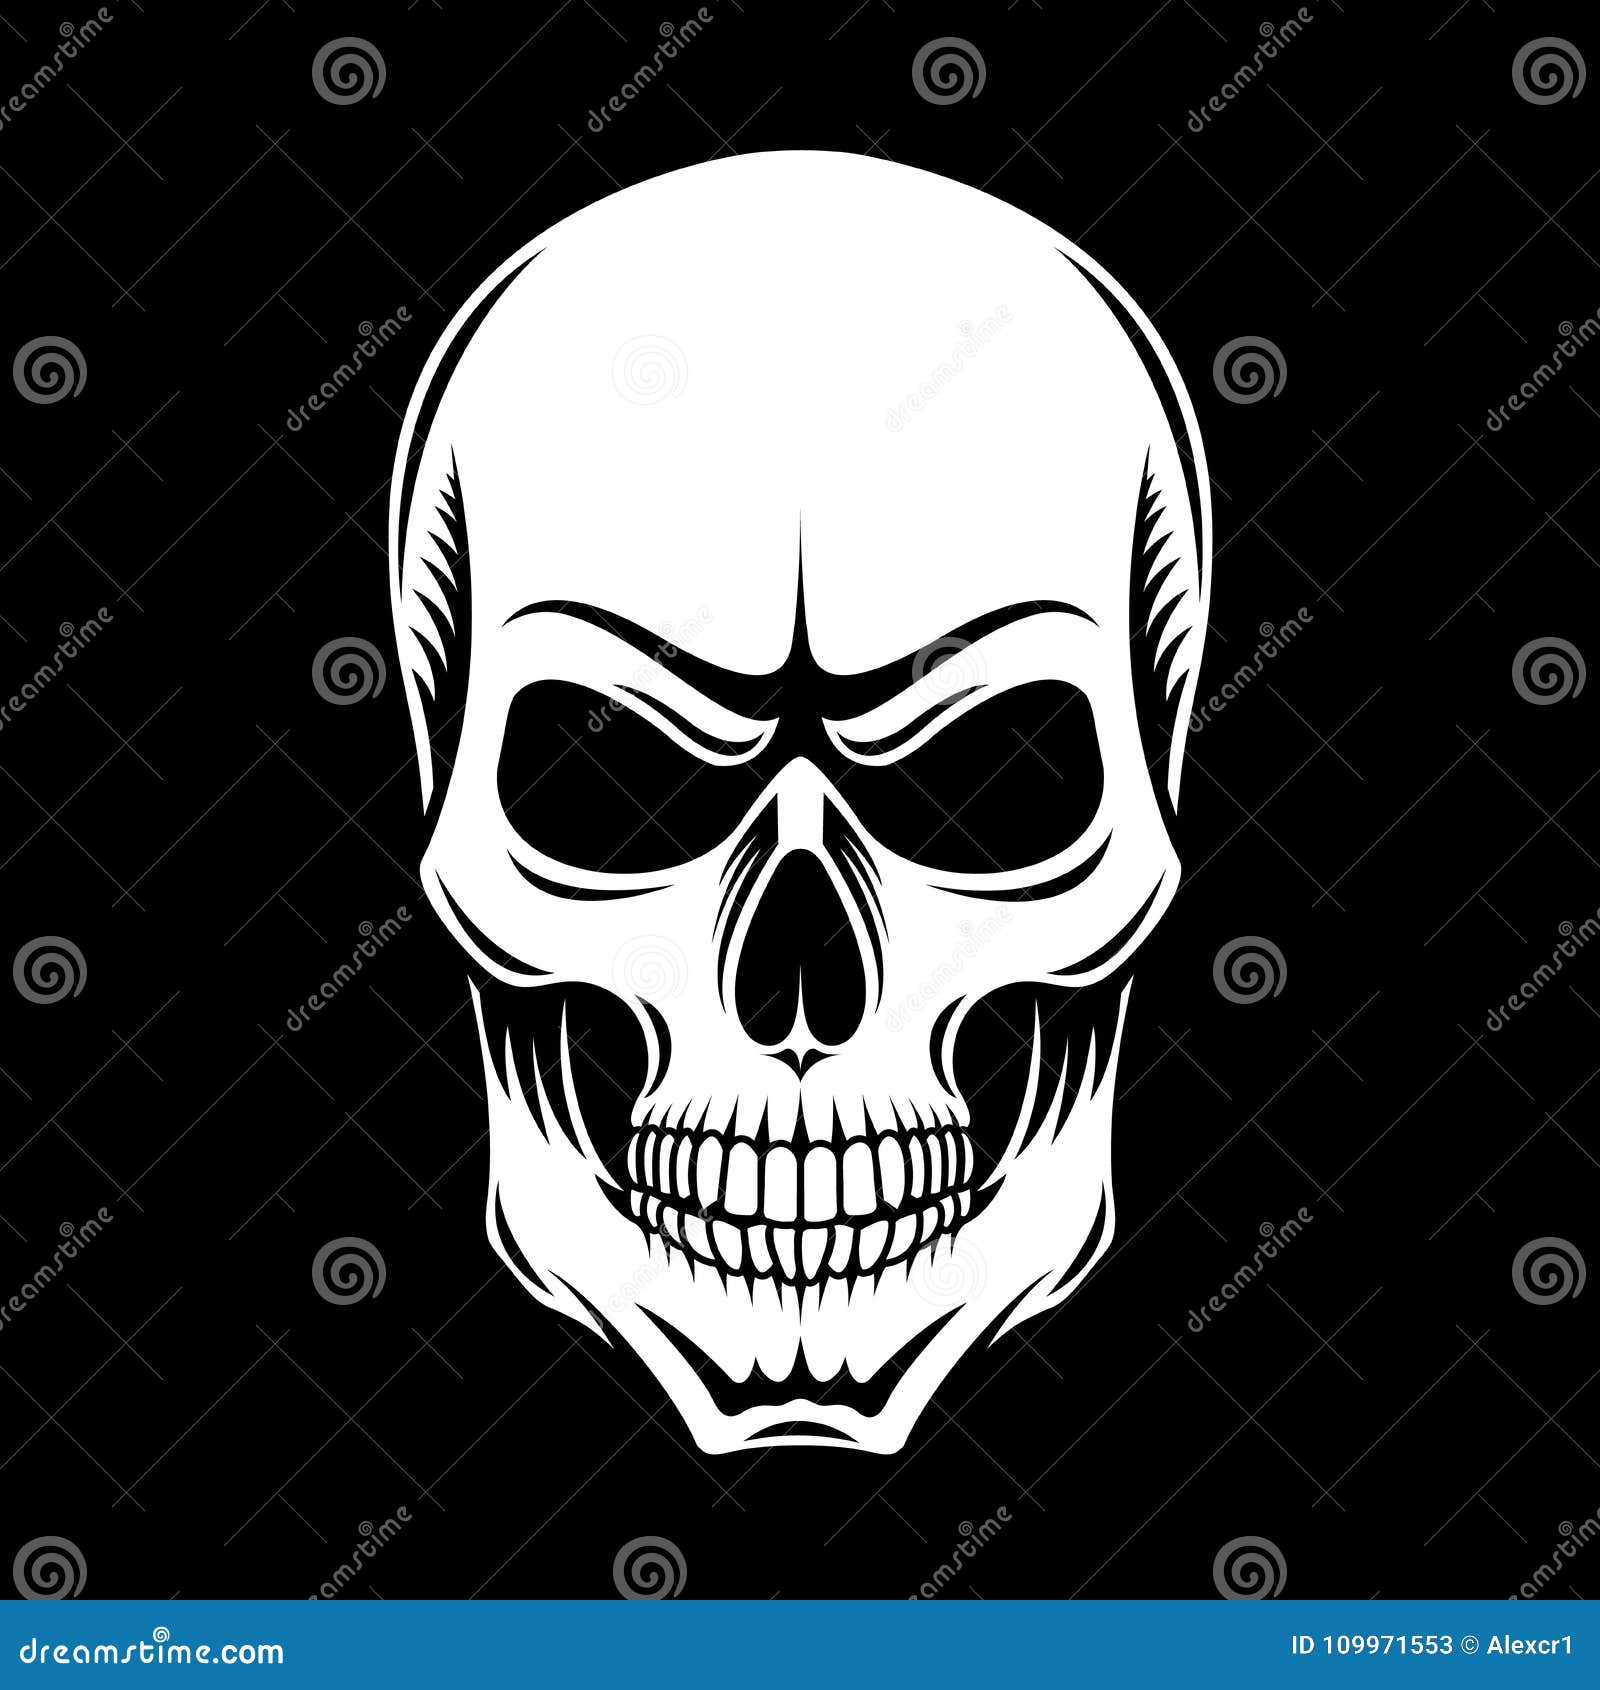 White Skull on a Black Background Stock Vector - Illustration of anatomy,  pirate: 109971553